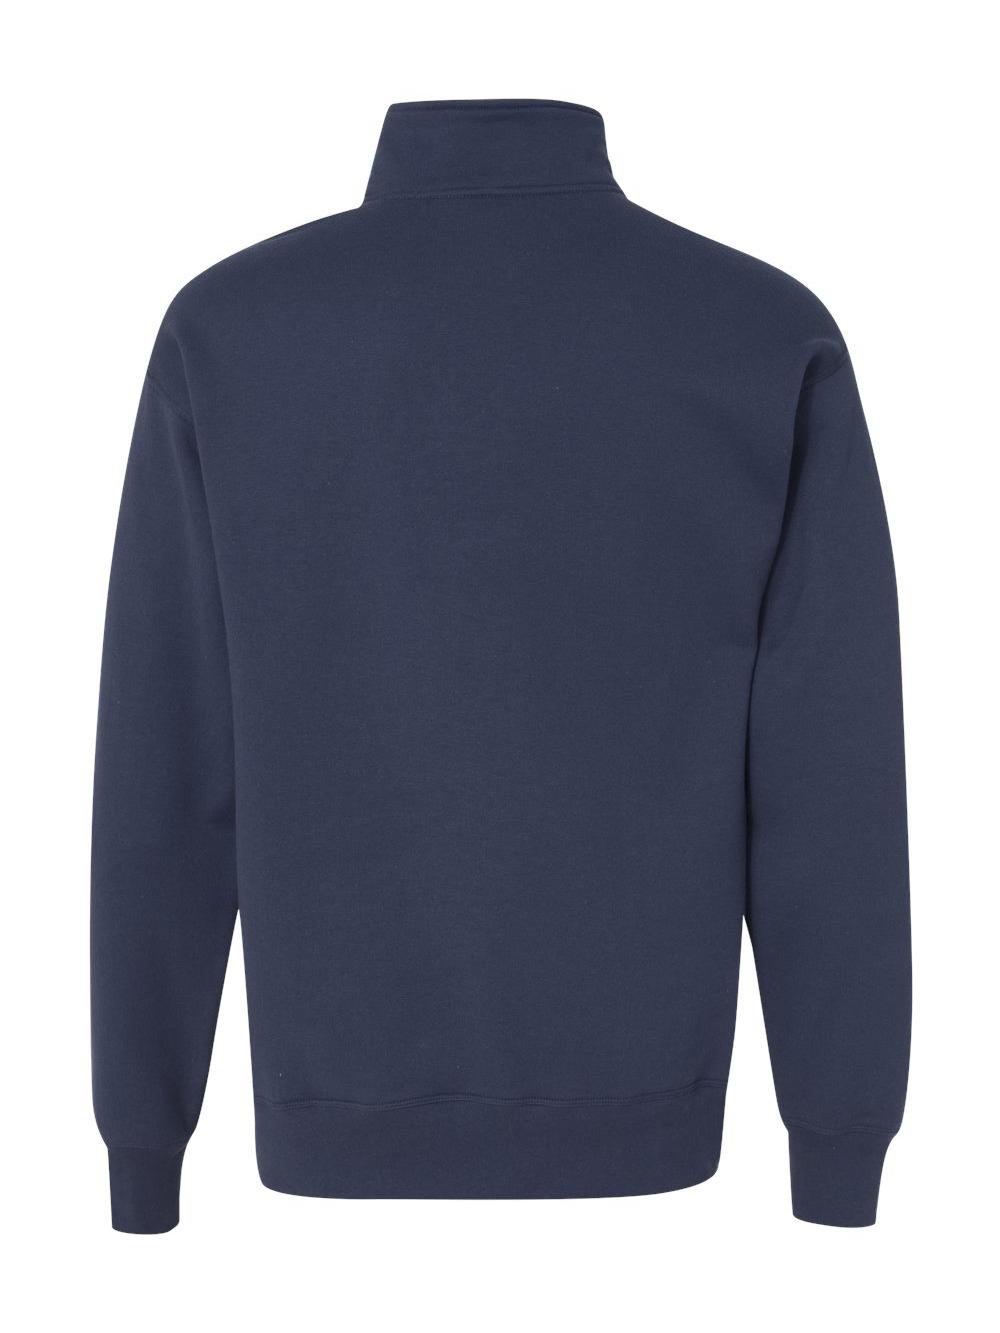 Men's Nano Premium Soft Lightweight Fleece Jacket - image 3 of 3